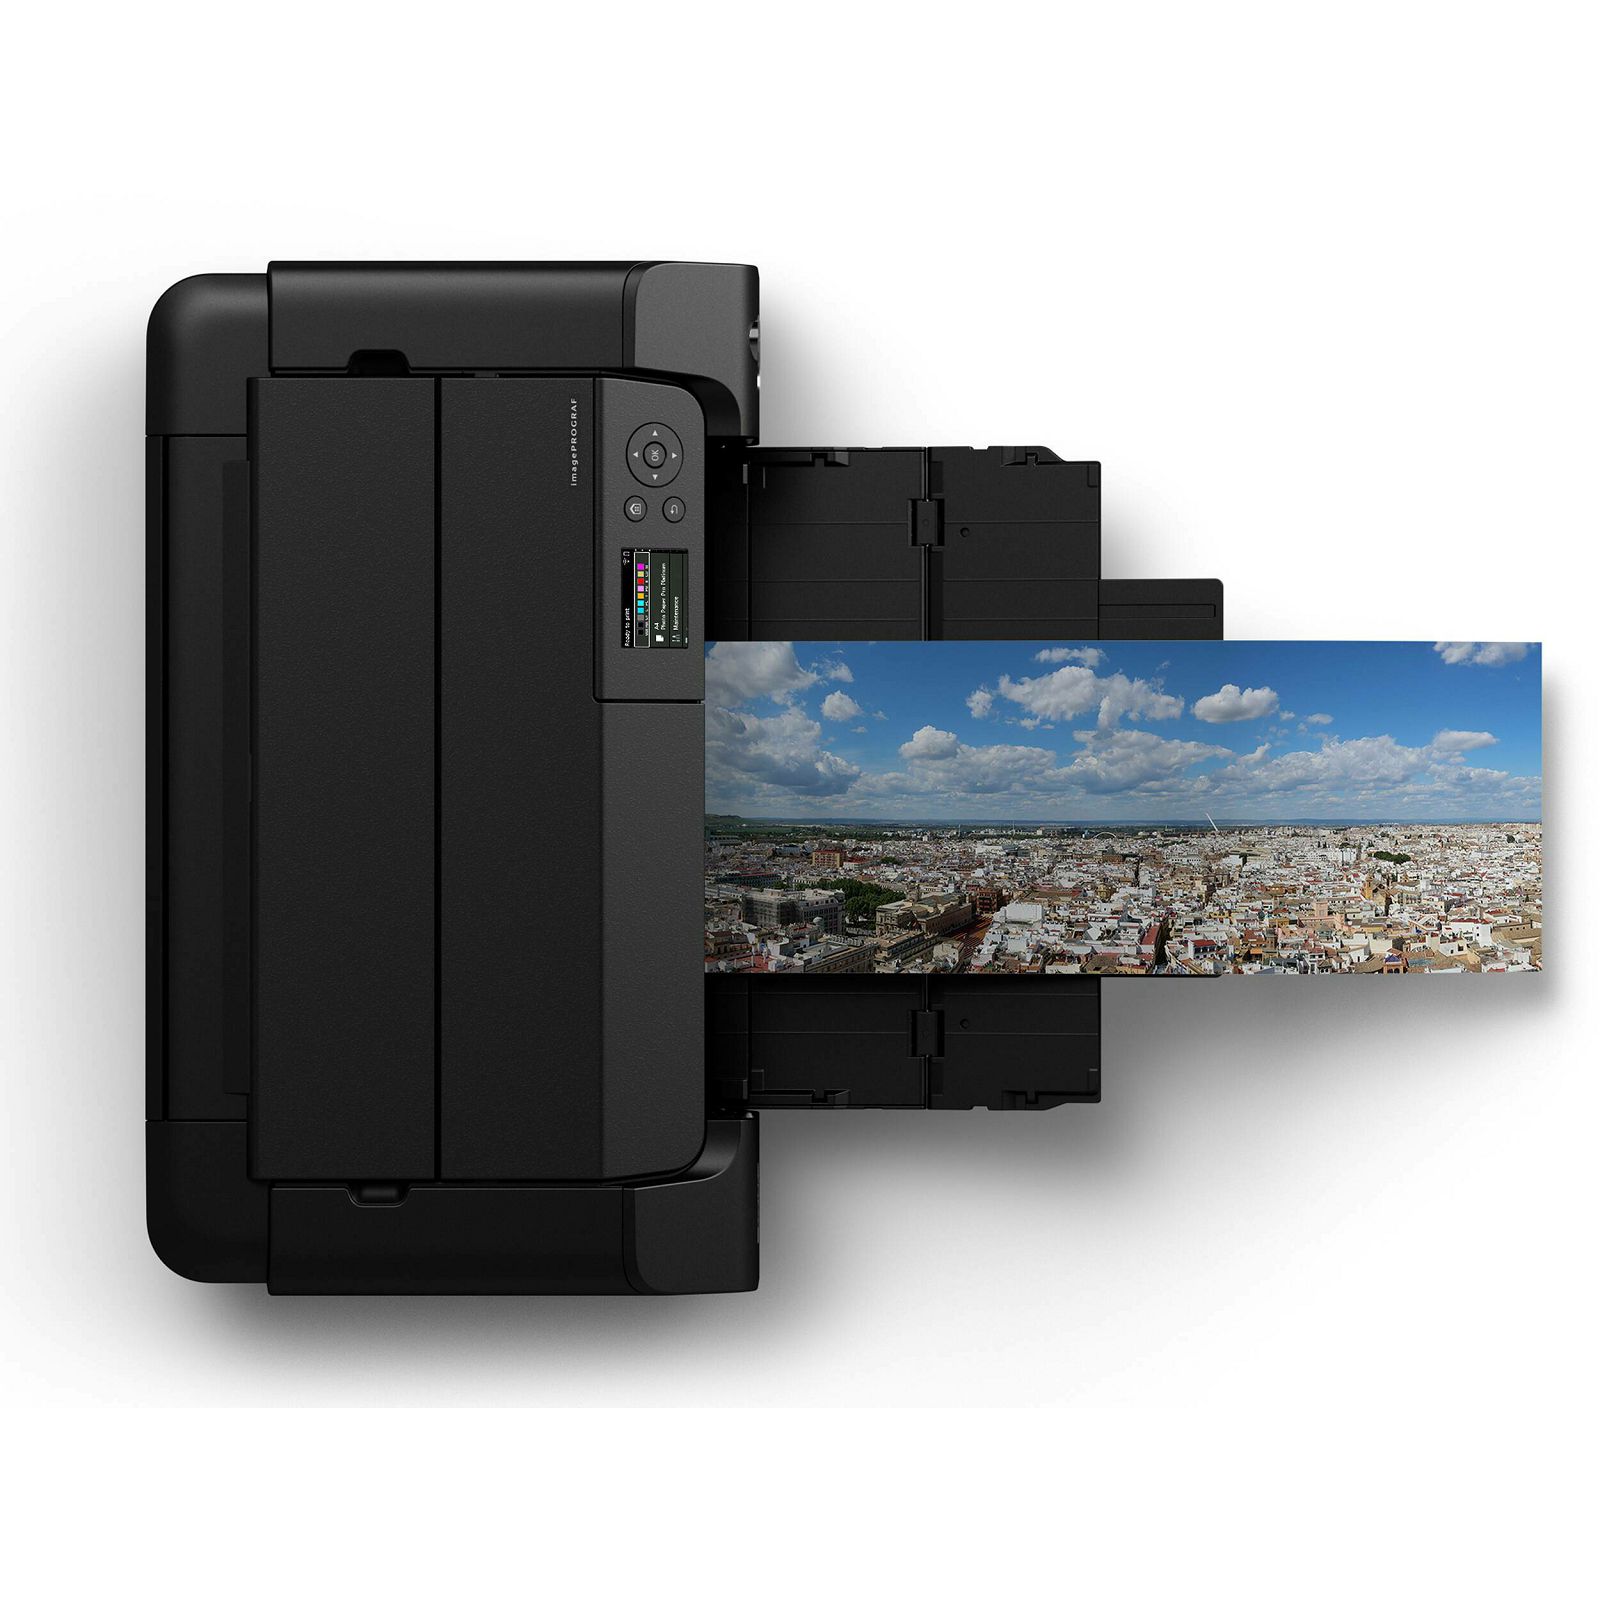 Canon imagePROGRAF PRO-300 13" Professional Photographic Inkjet Photo fotografski printer (4278C009AA)